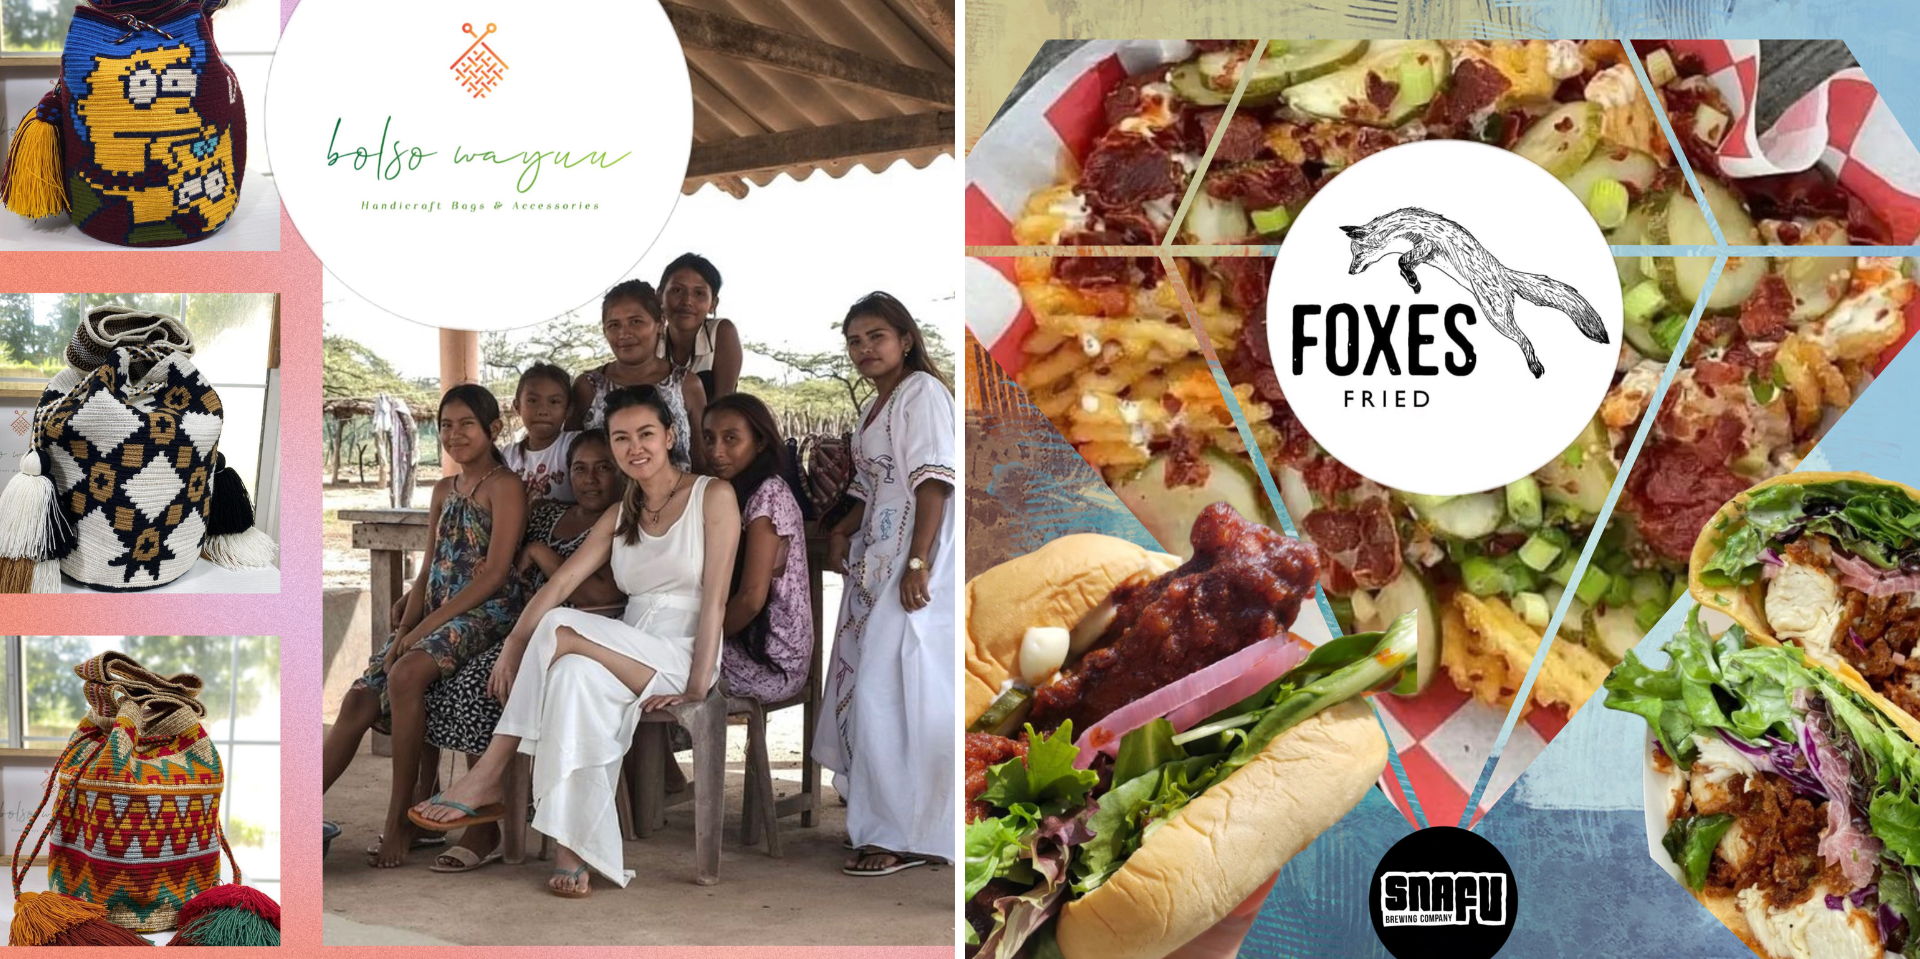 Foxes Fried & Bolso Wayuu Pop Up promotional image